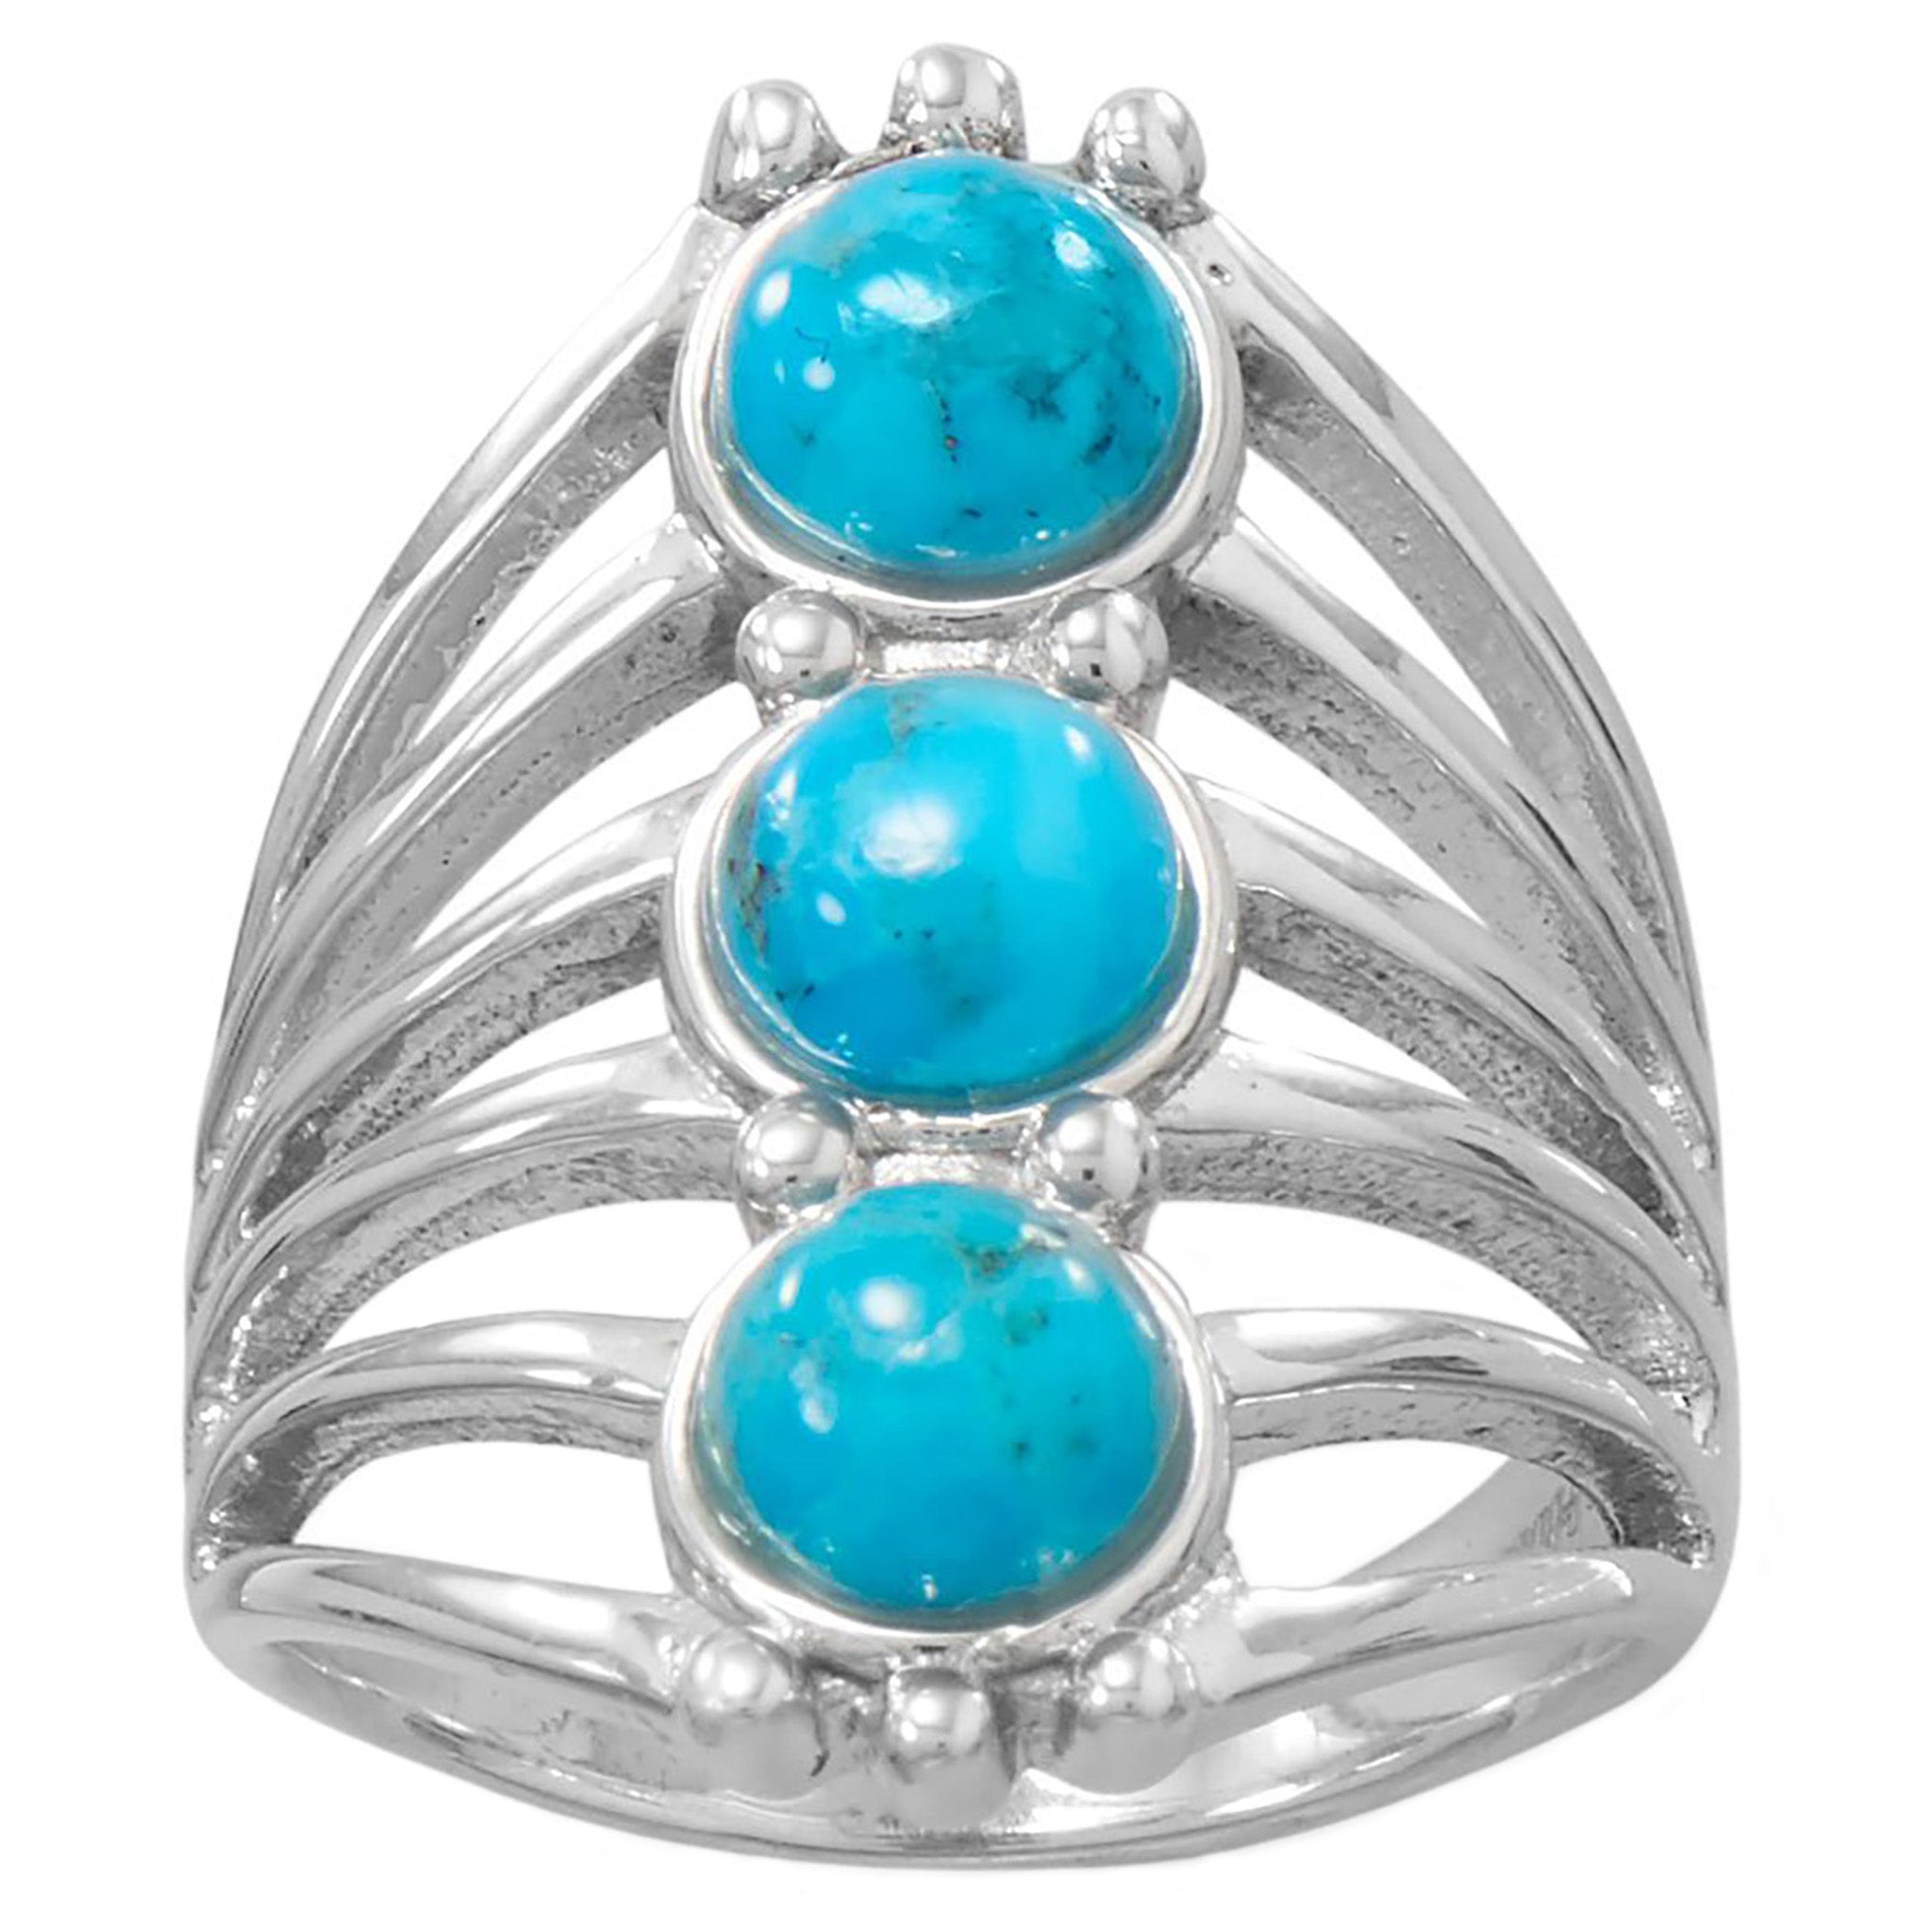 Polished Cabochon Turquoise Ring